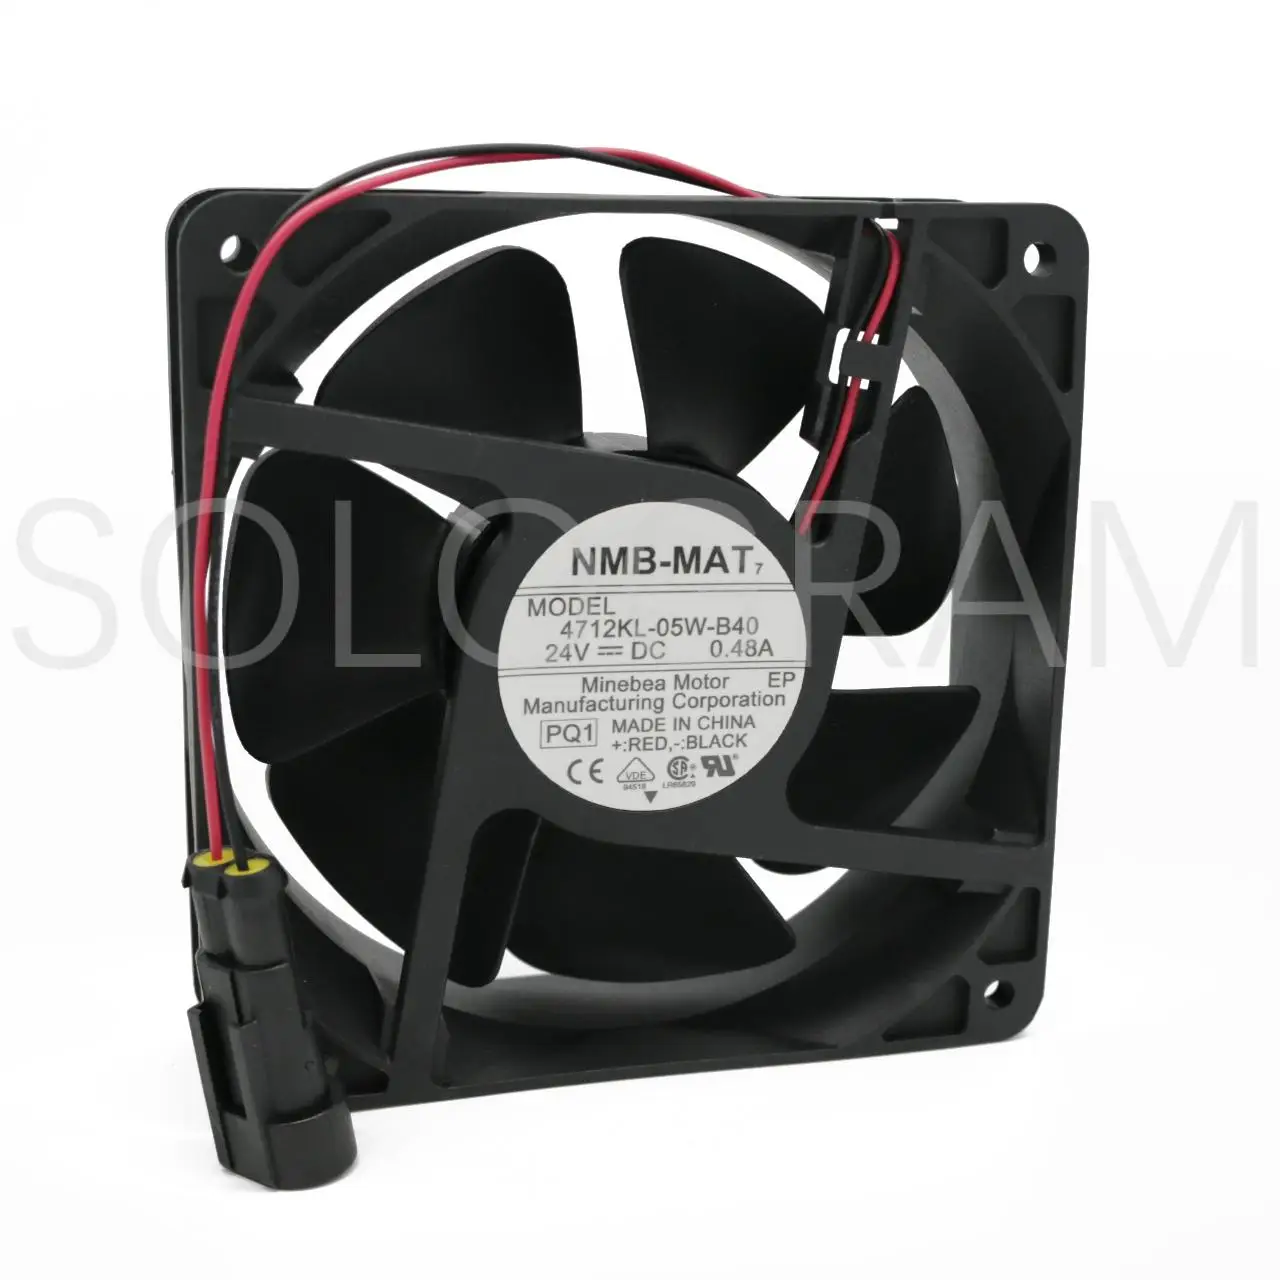 

1Pc Brand New For Minebea Motor NMB-MAT7 4712KL-05W-B40 24V 0.48A 12038 120*120*38MM Inverter Cooling Fan